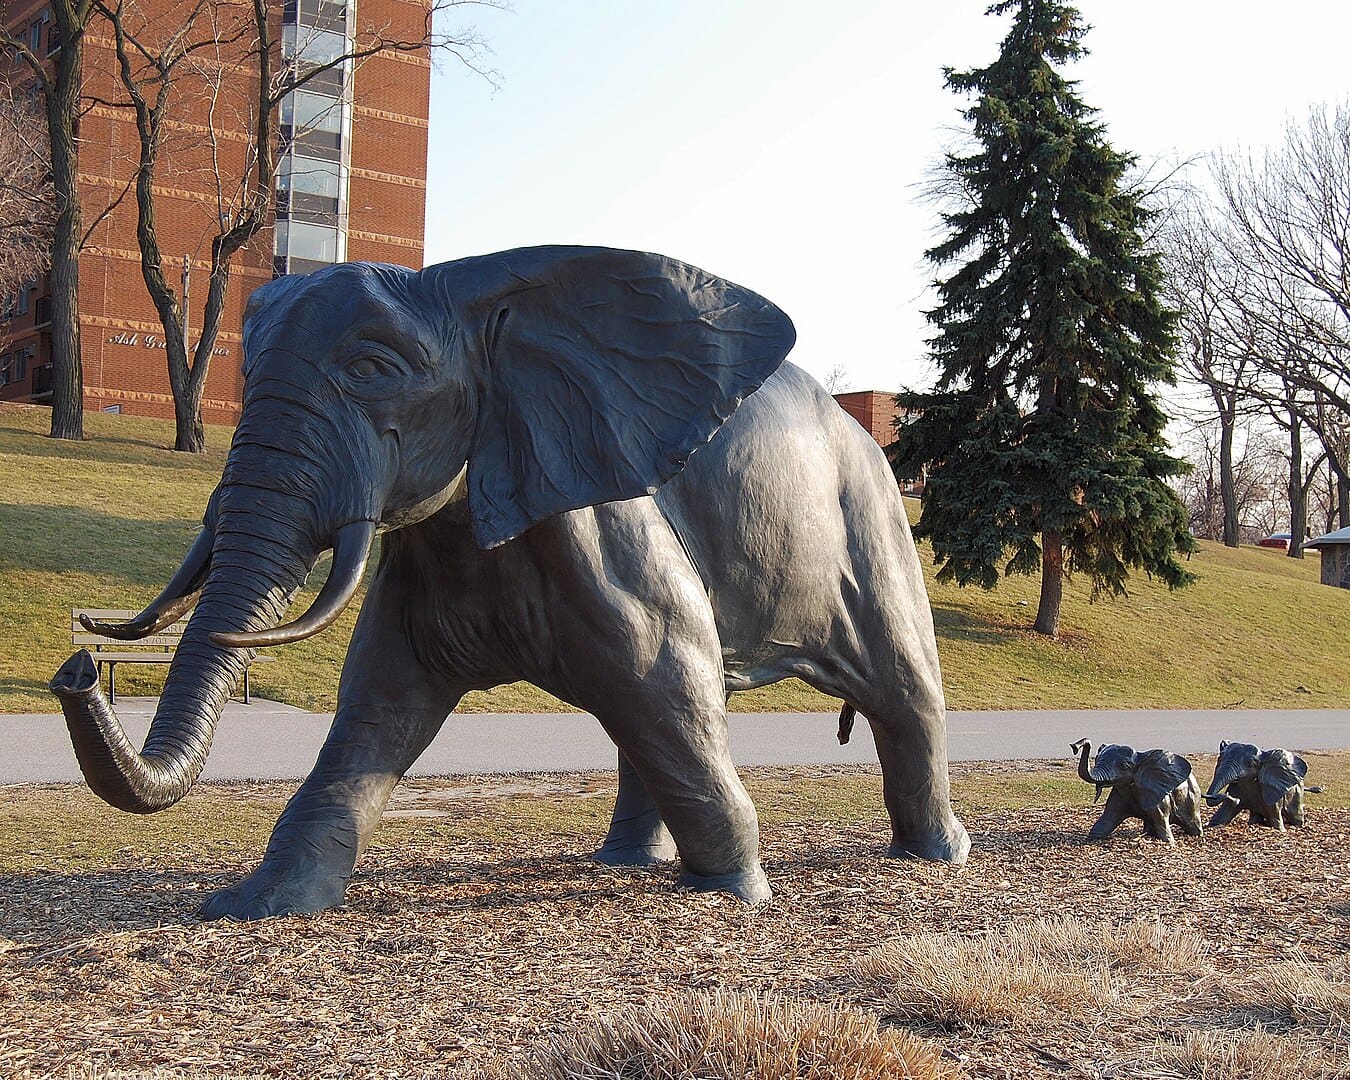 elephant sculpture at Odette sculpture park near university of windsor canada